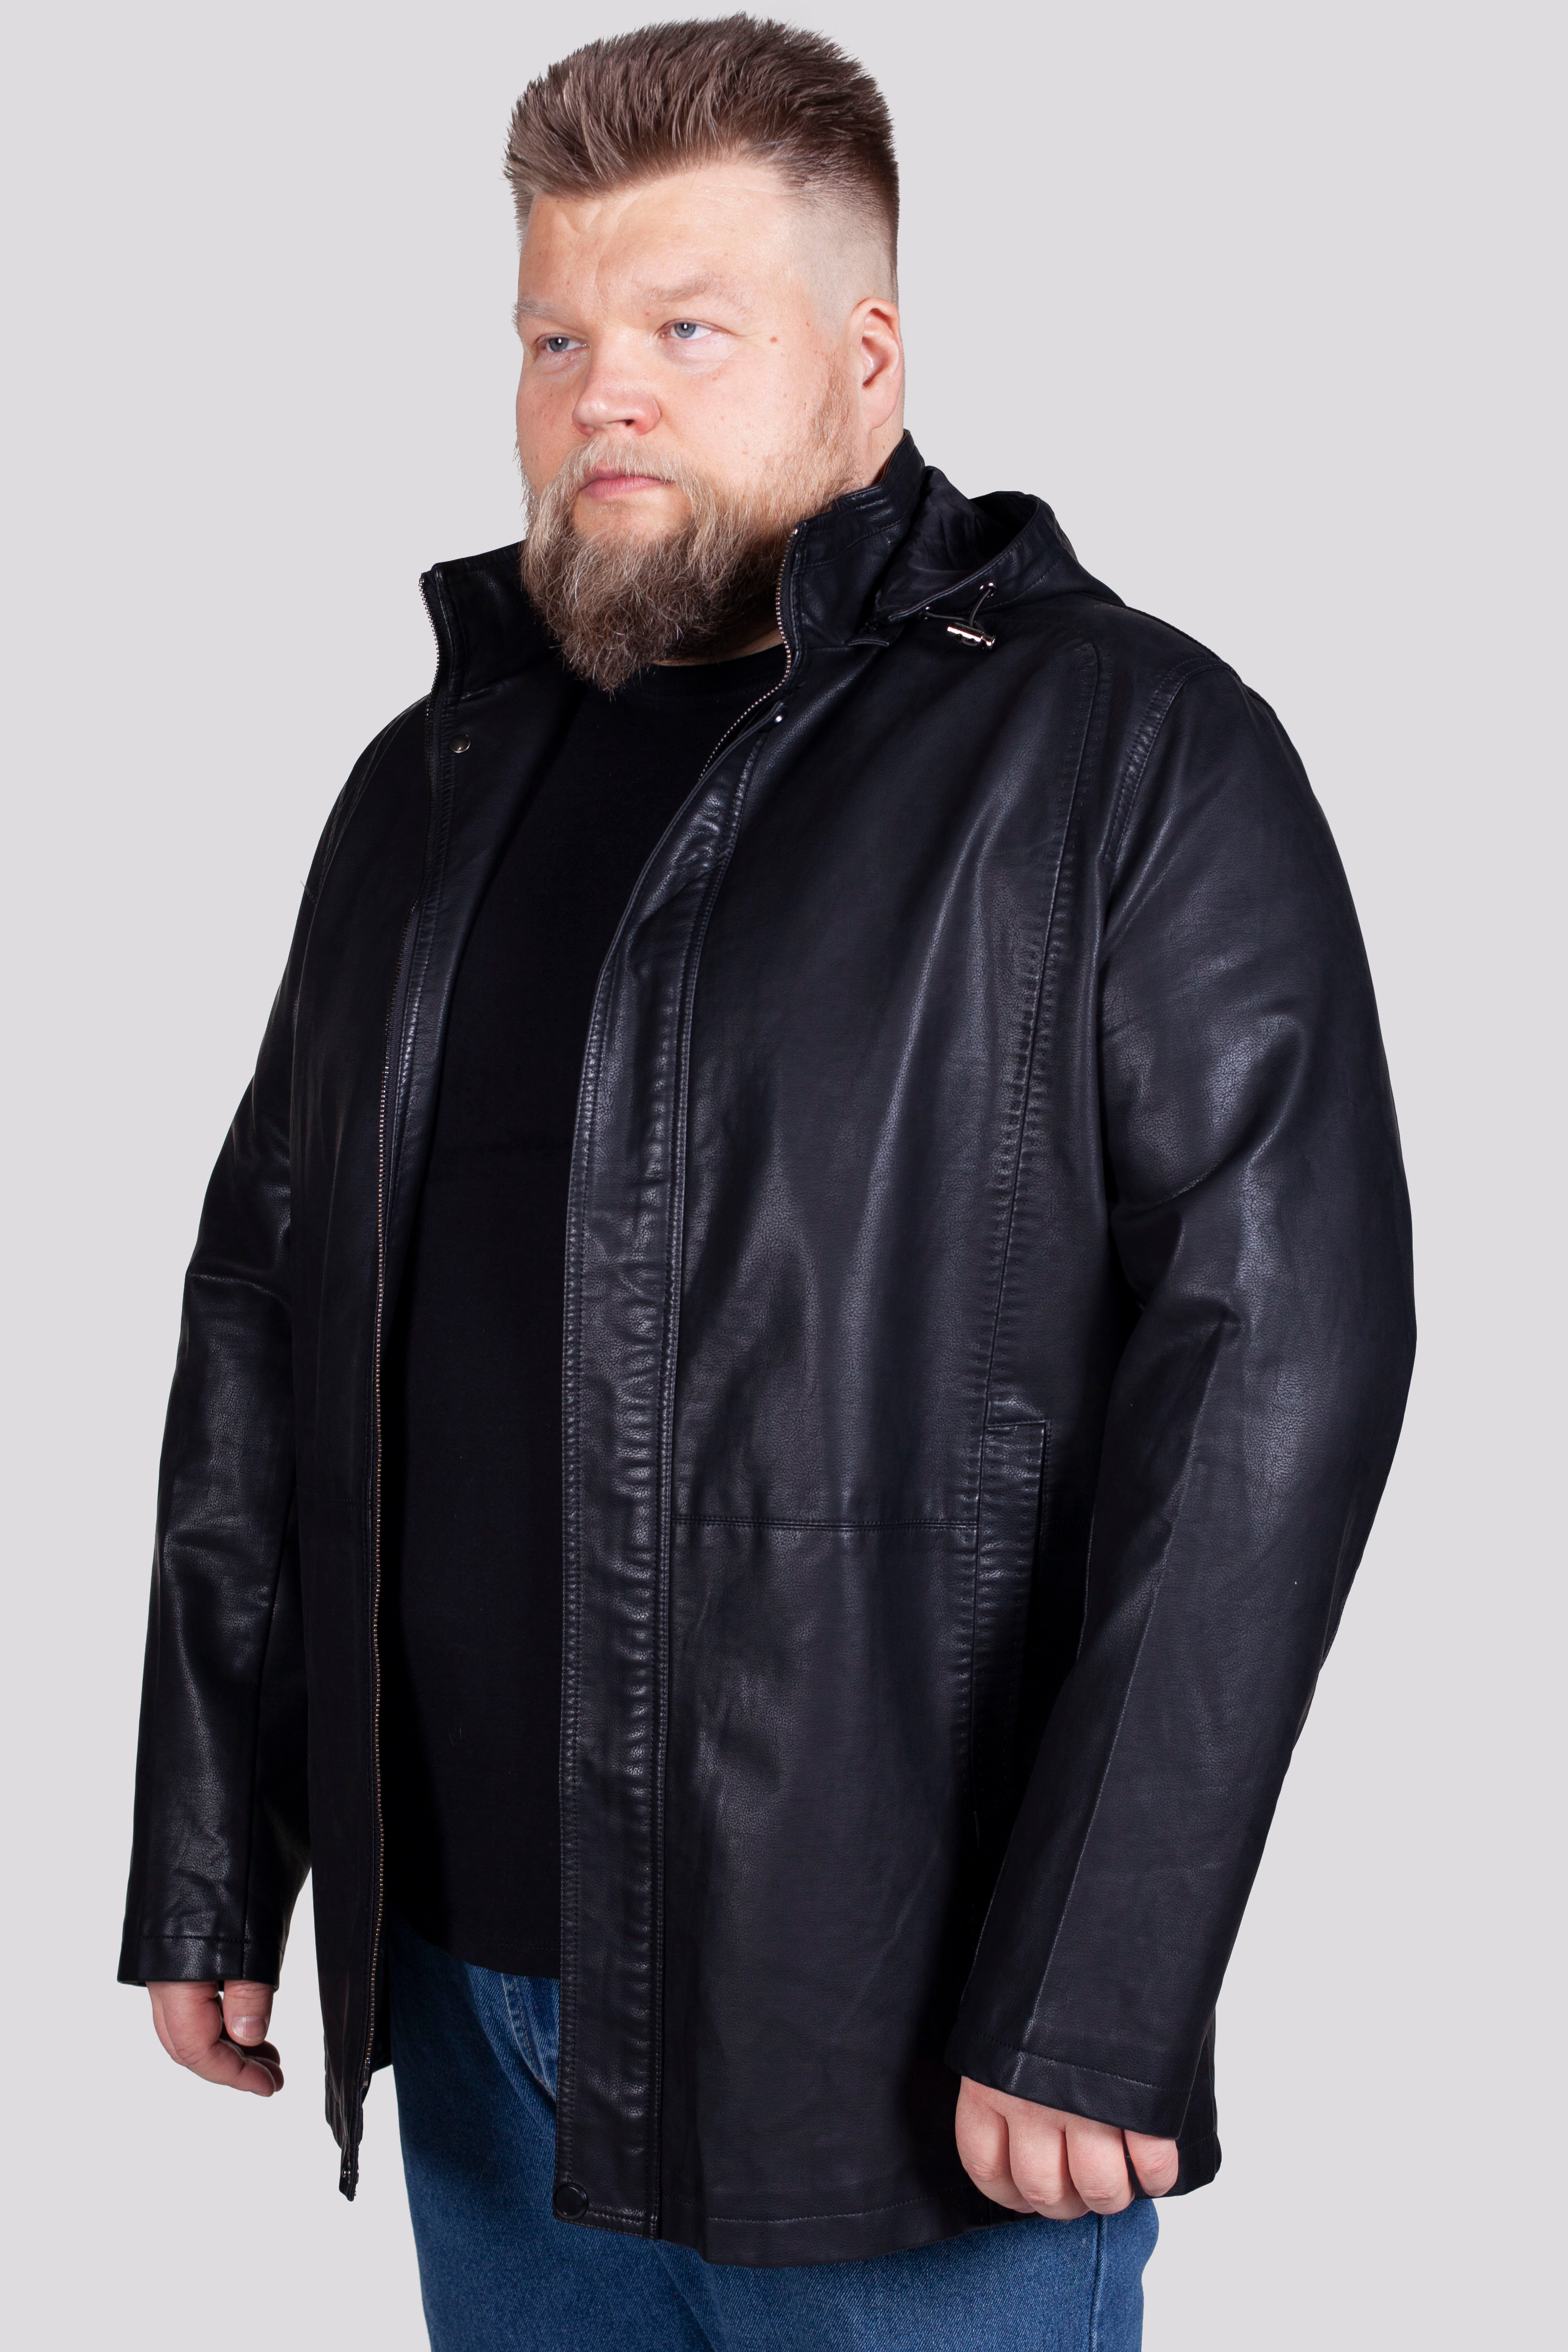 Кожаная куртка мужская ORO 1613 черная 60 RU